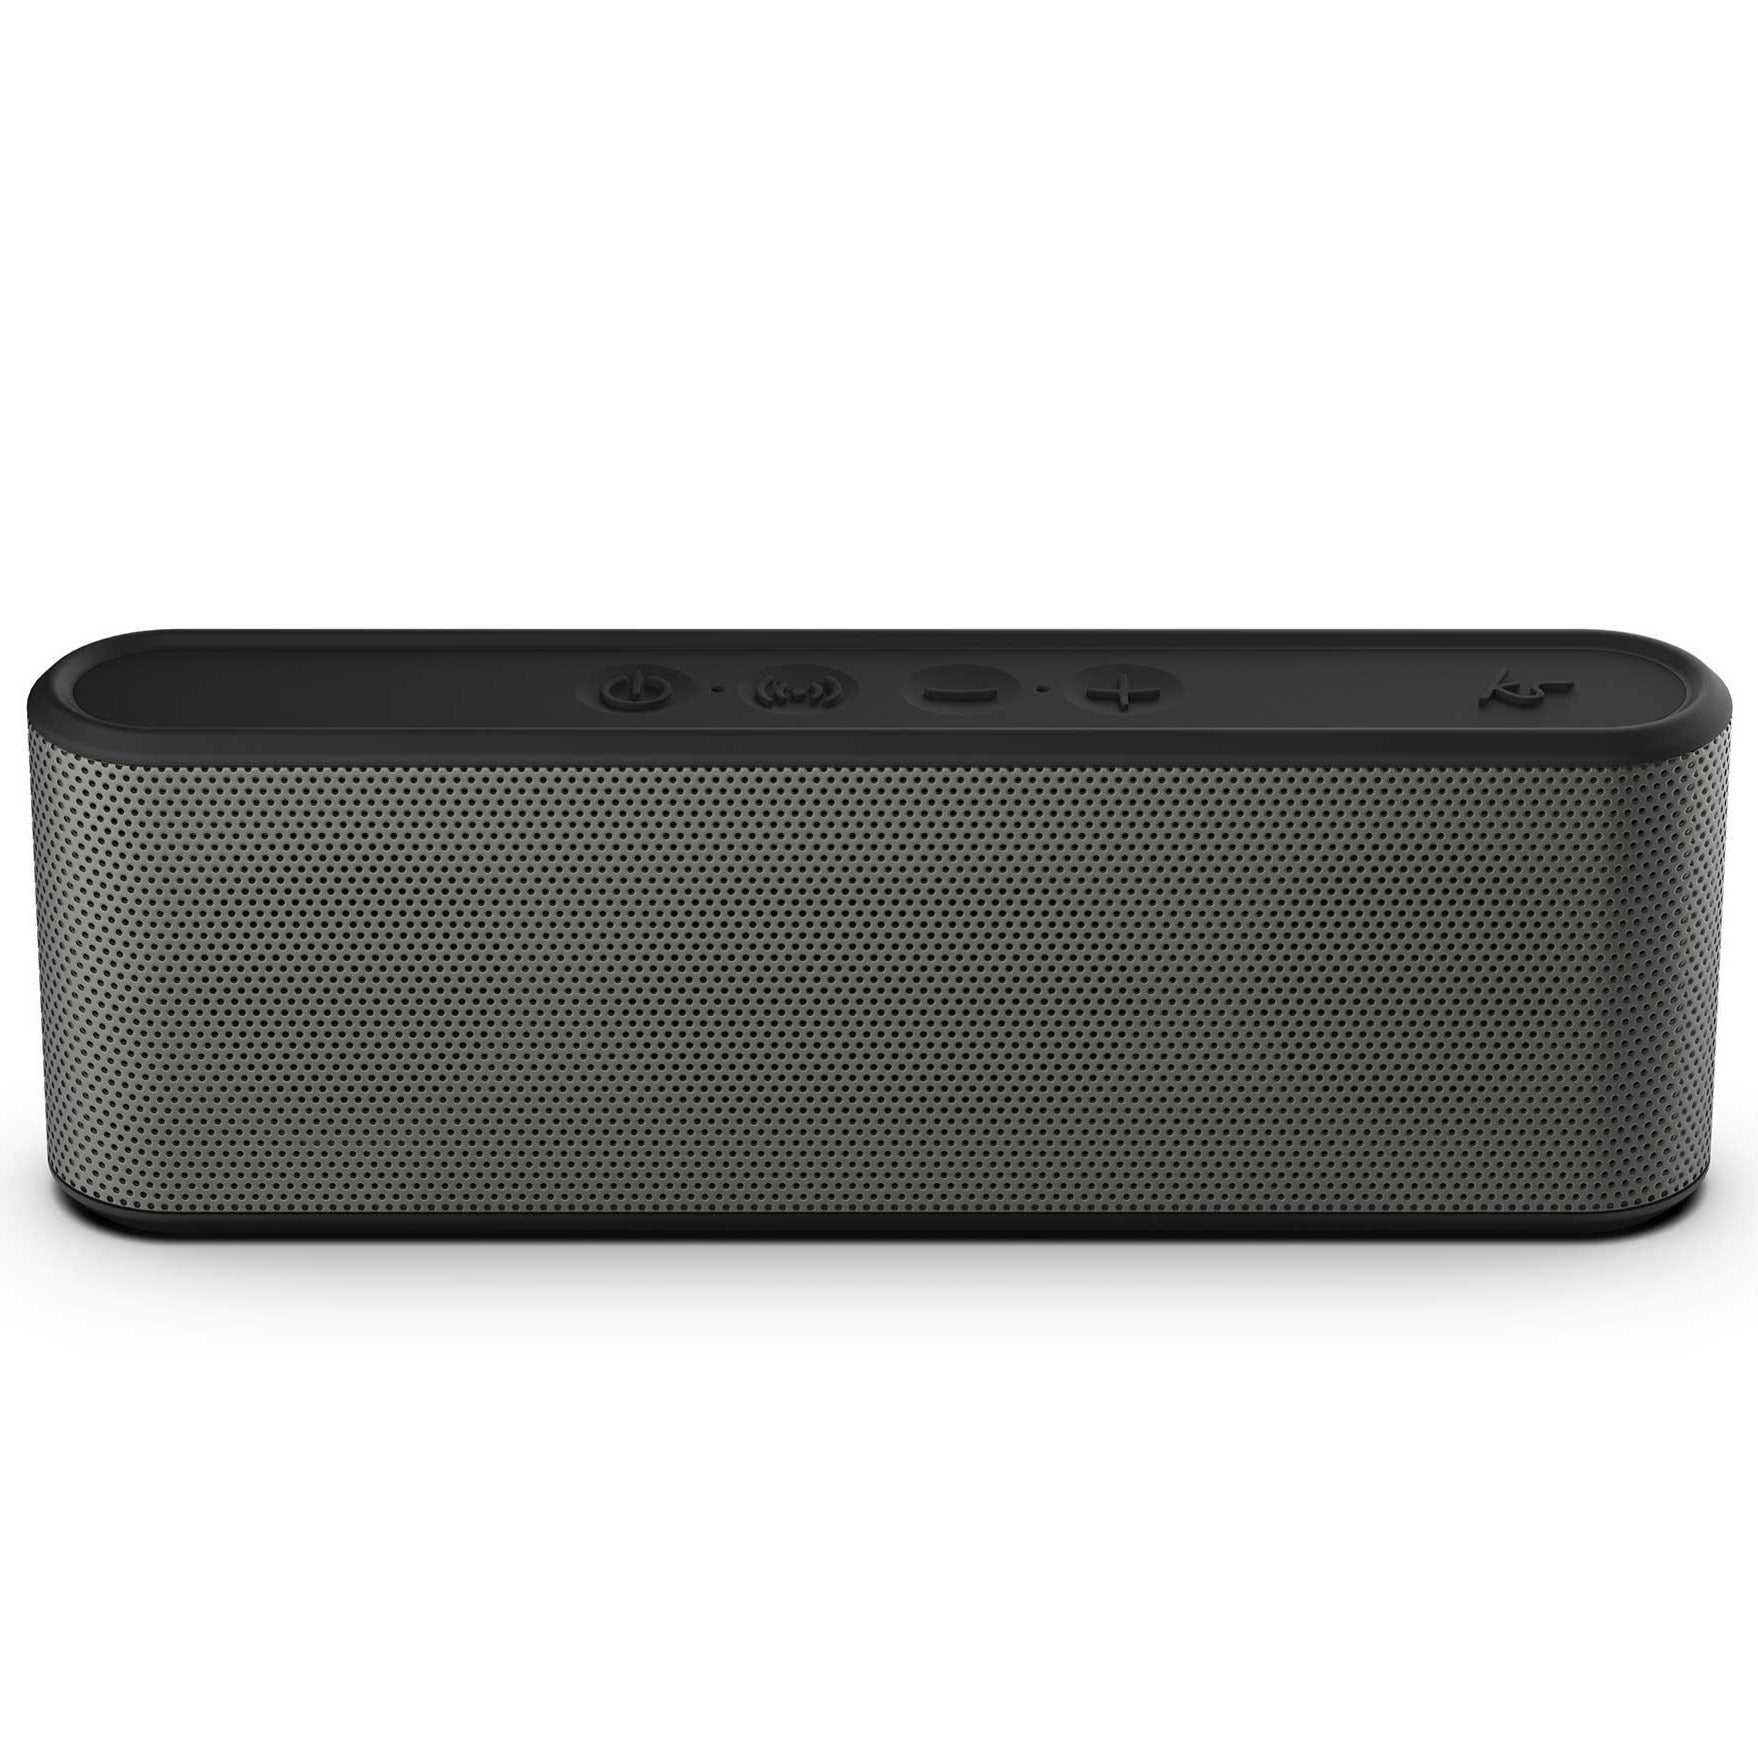 KitSound Boombar 30 Bluetooth Speaker - Black - Refurbished Pristine